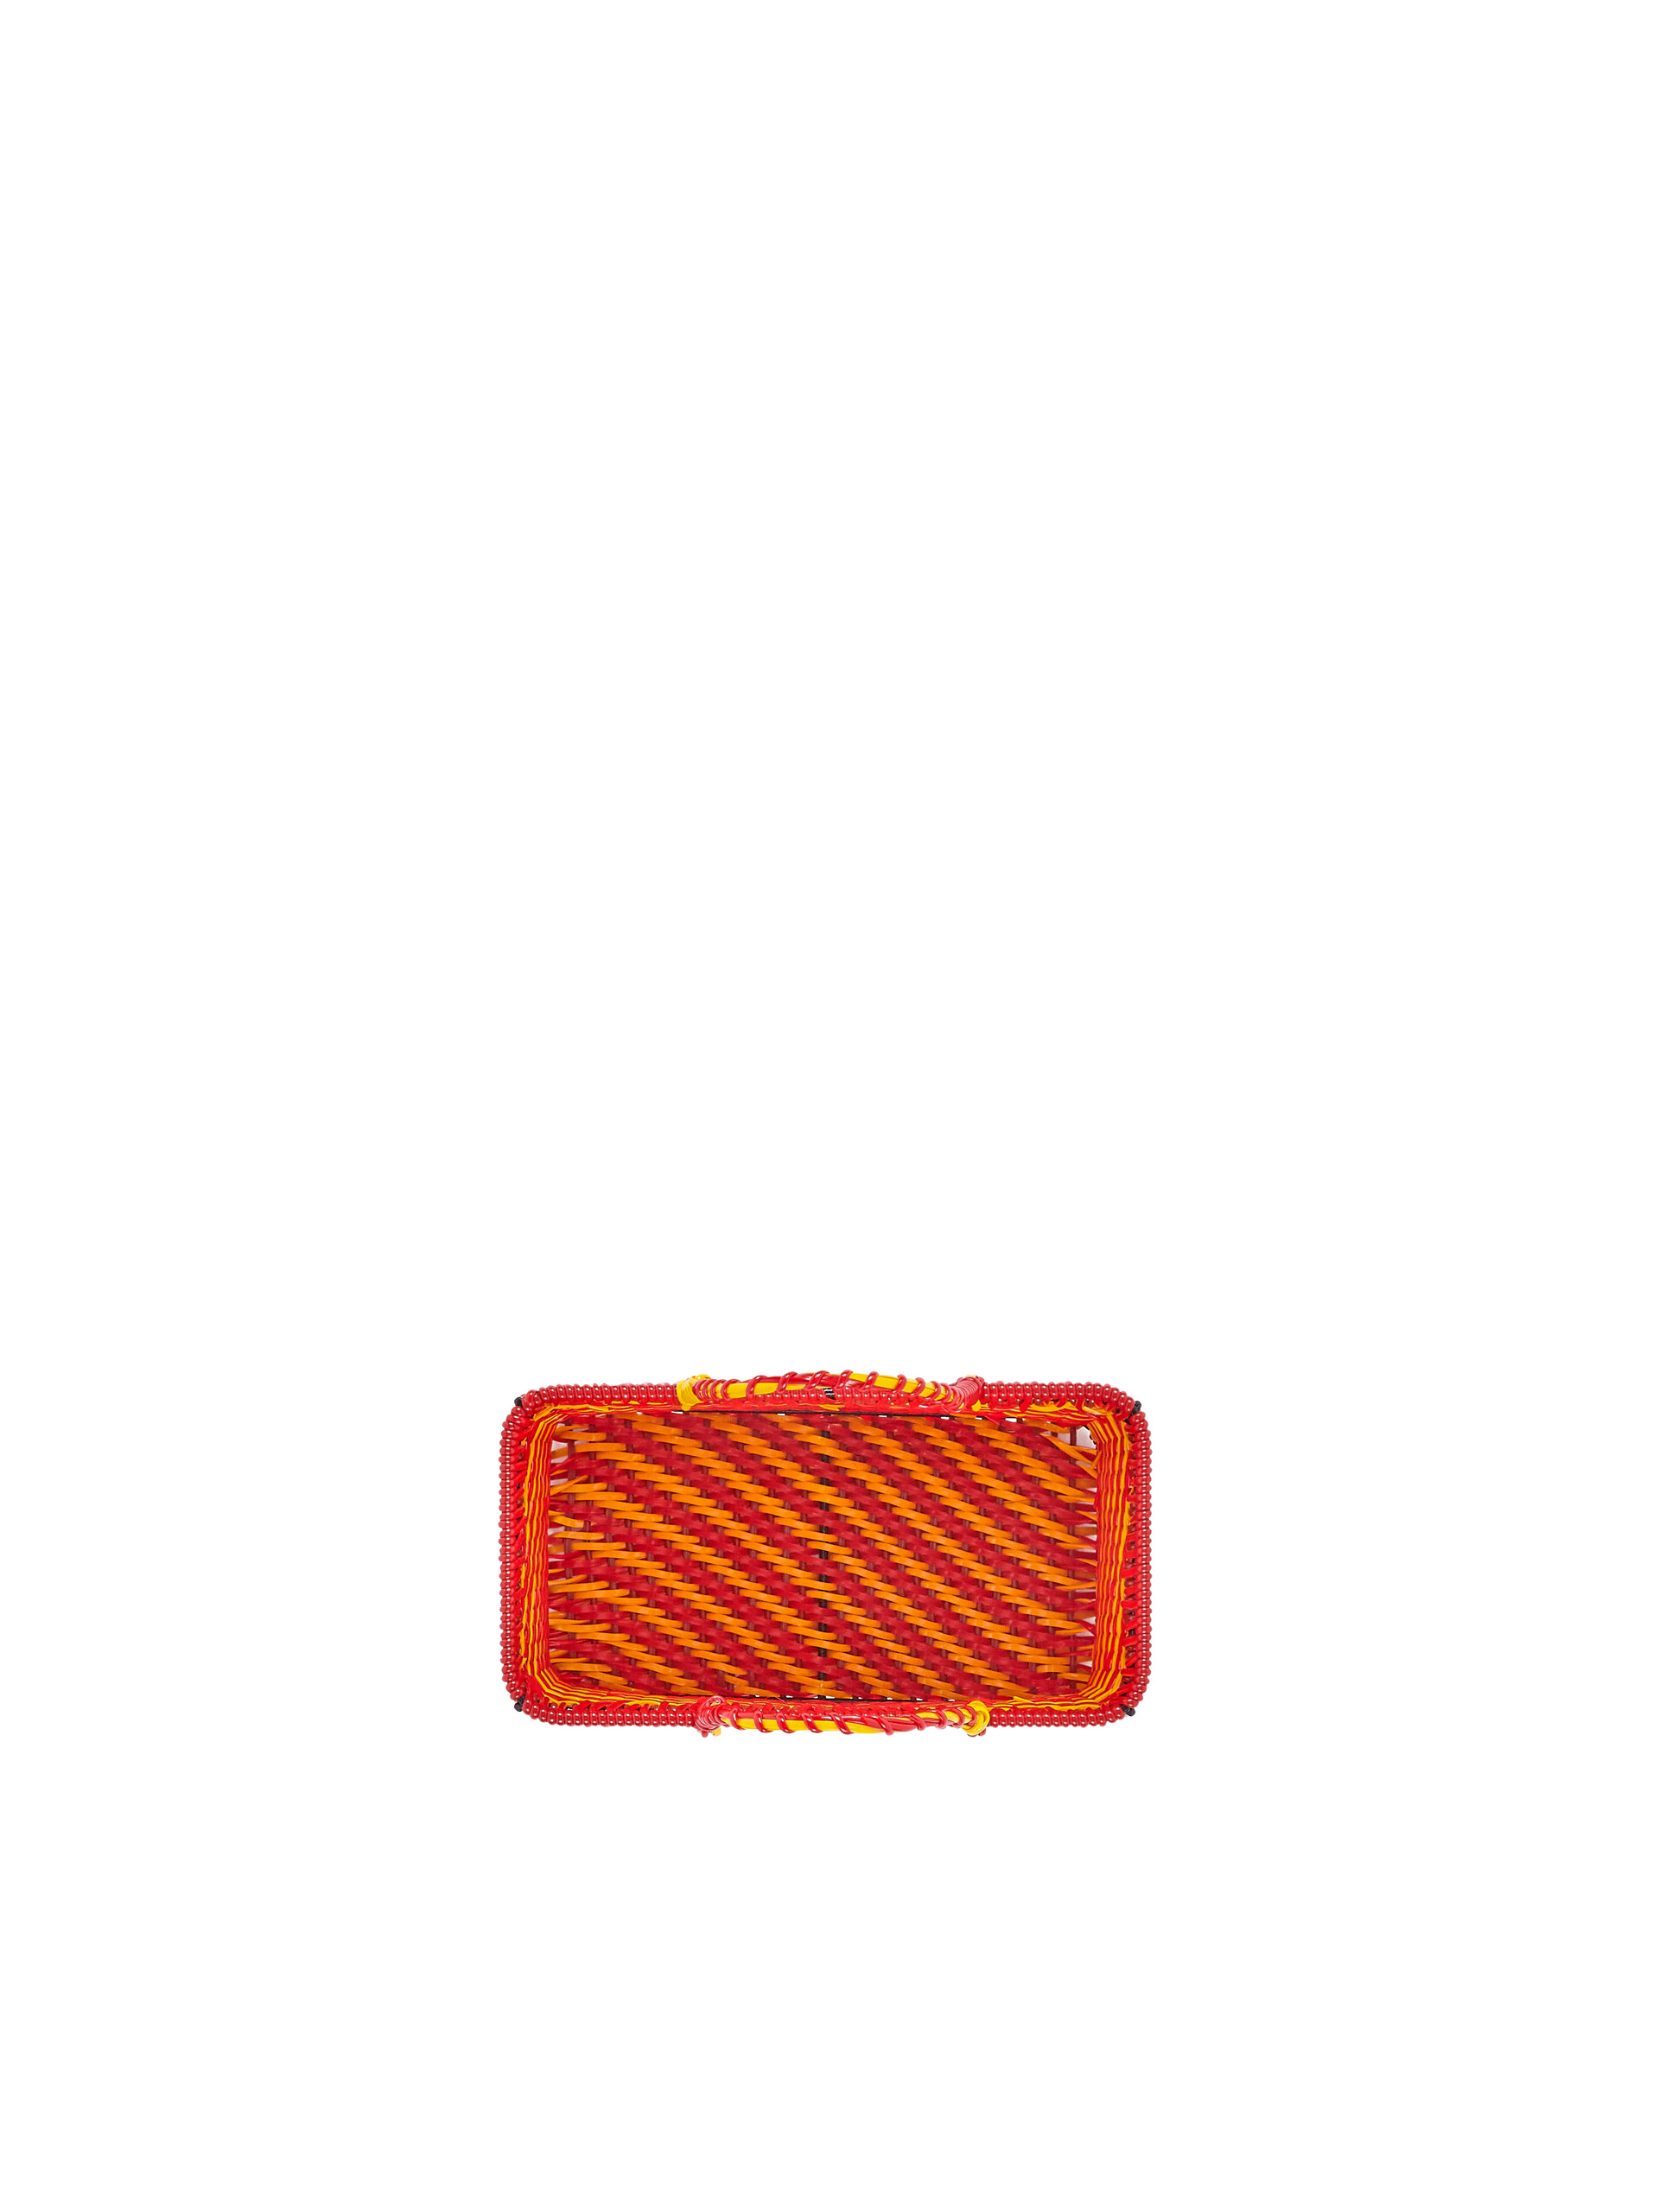 MARNI MARKET Korb in Orange und Rot - Accessoires - Image 4